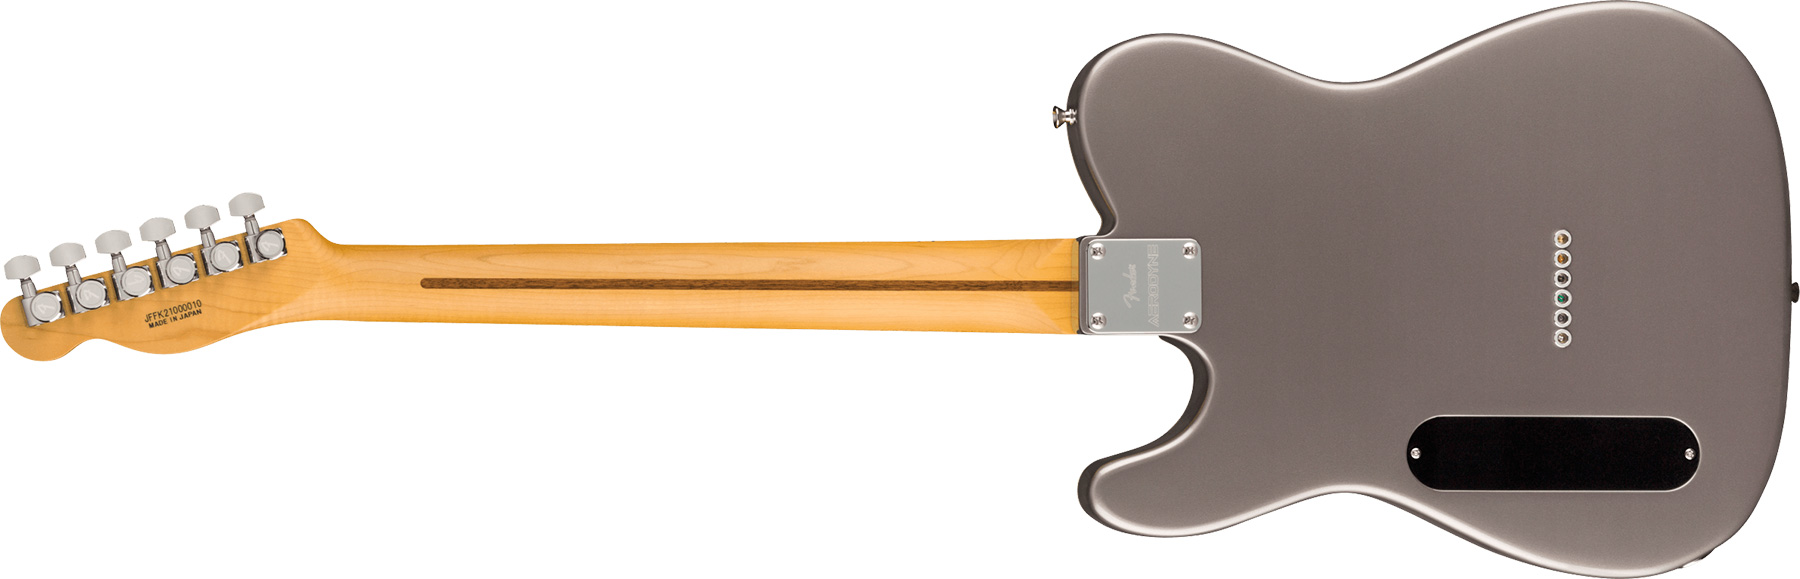 Fender Tele Aerodyne Special Jap 2s Ht Mn - Dolphin Gray Metallic - E-Gitarre in Teleform - Variation 1